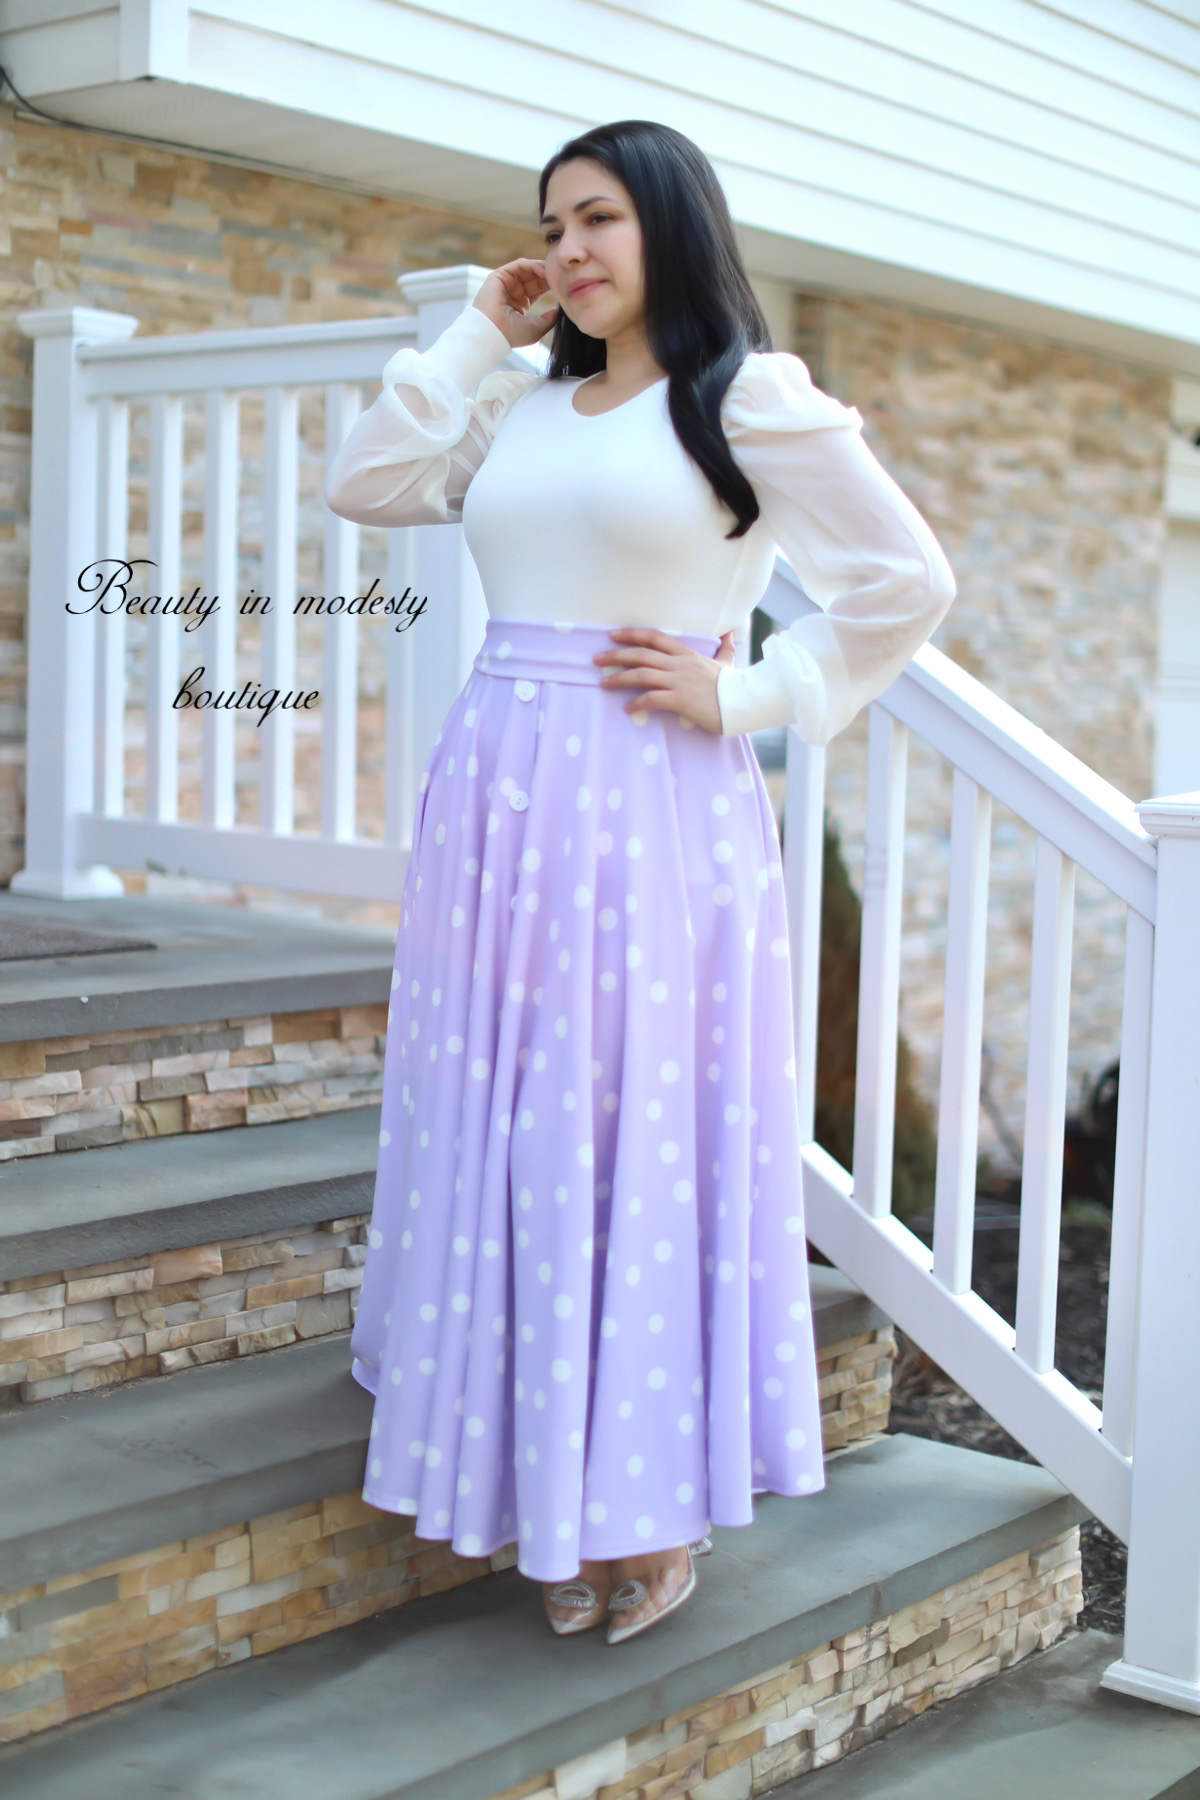 Lilac Dots Maxi Skirt